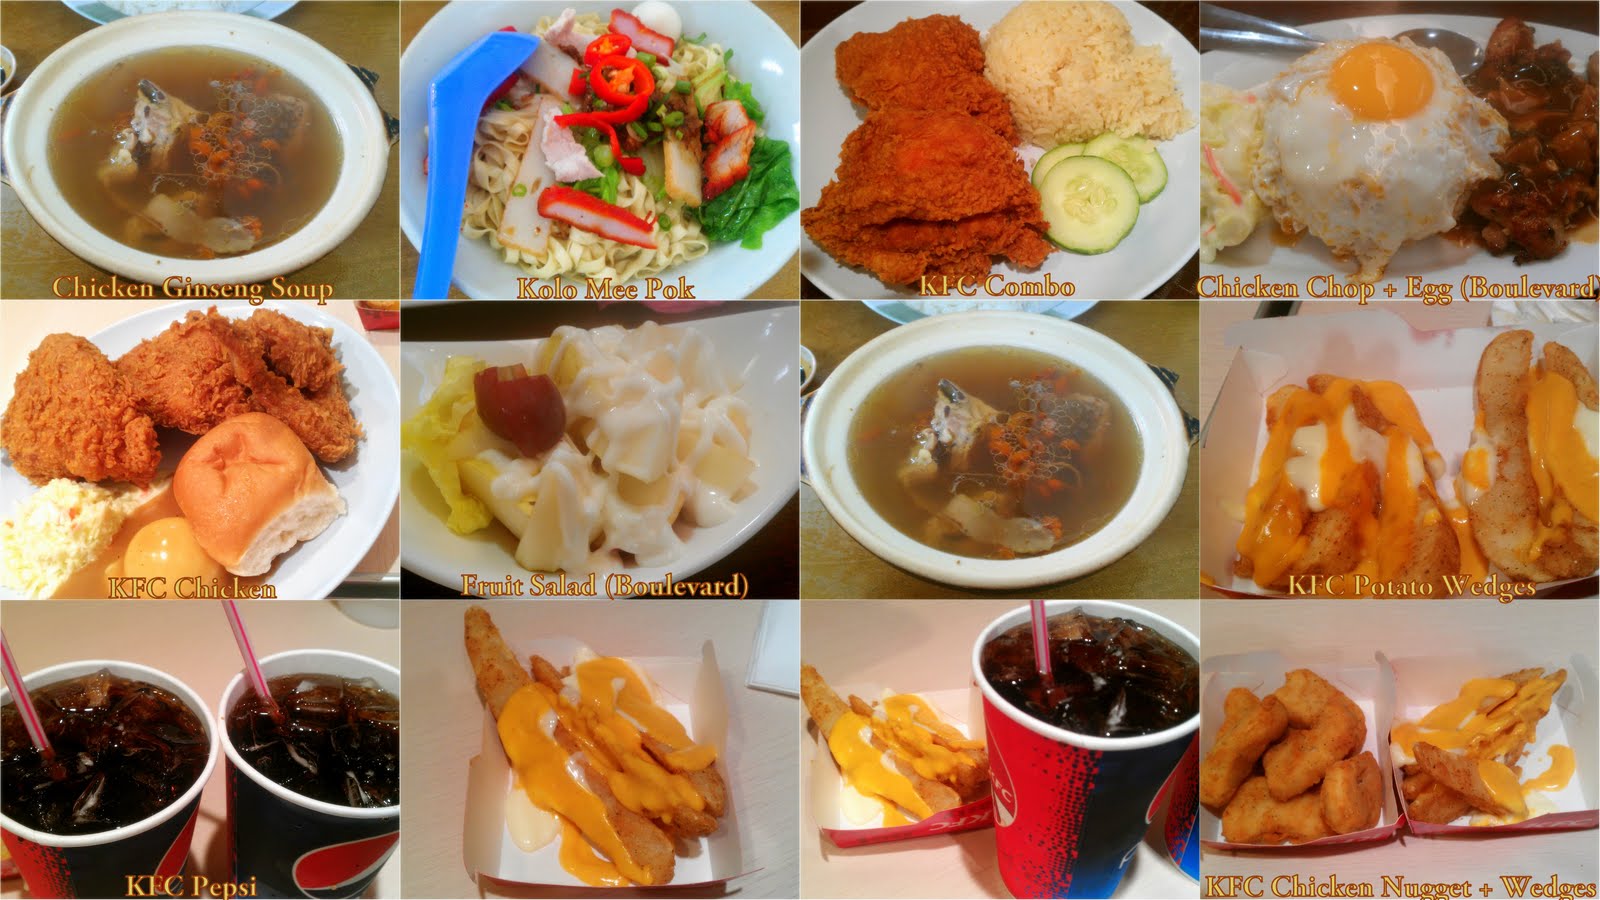 HomeMade DIY HowTo Make: Another menu in Kuching